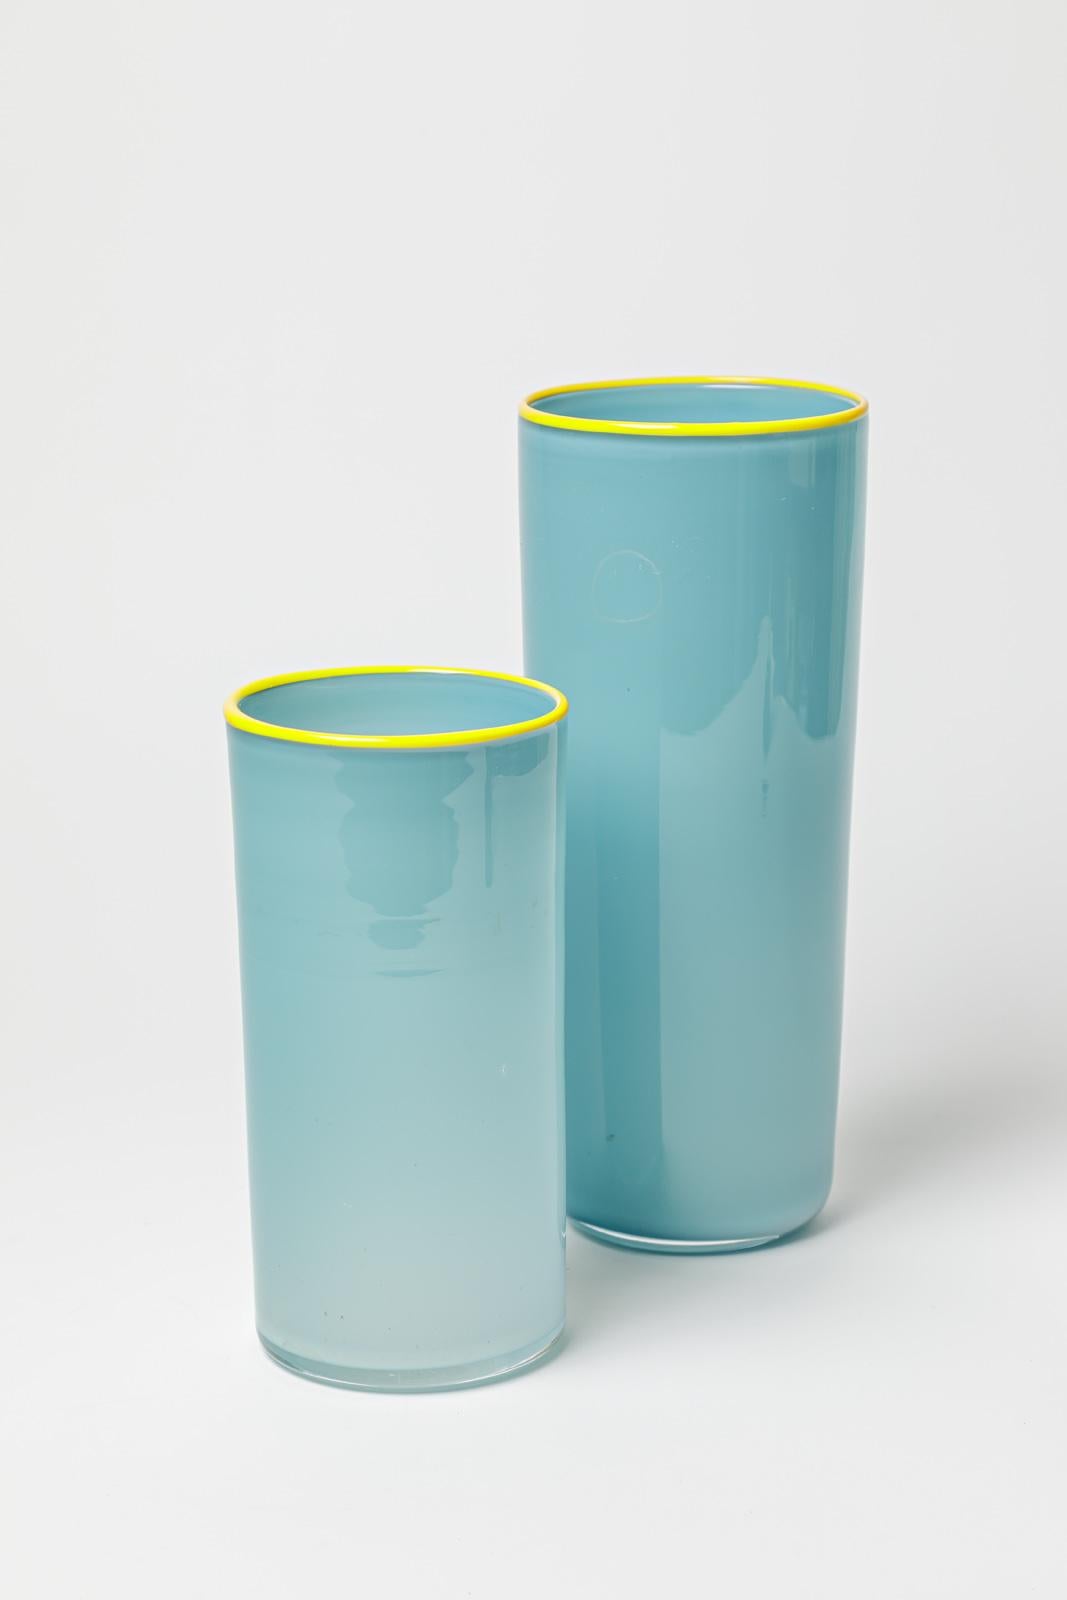 20th Century Eric Lindgren set of 2  light blue and yellow glass vases design 1996 unique For Sale